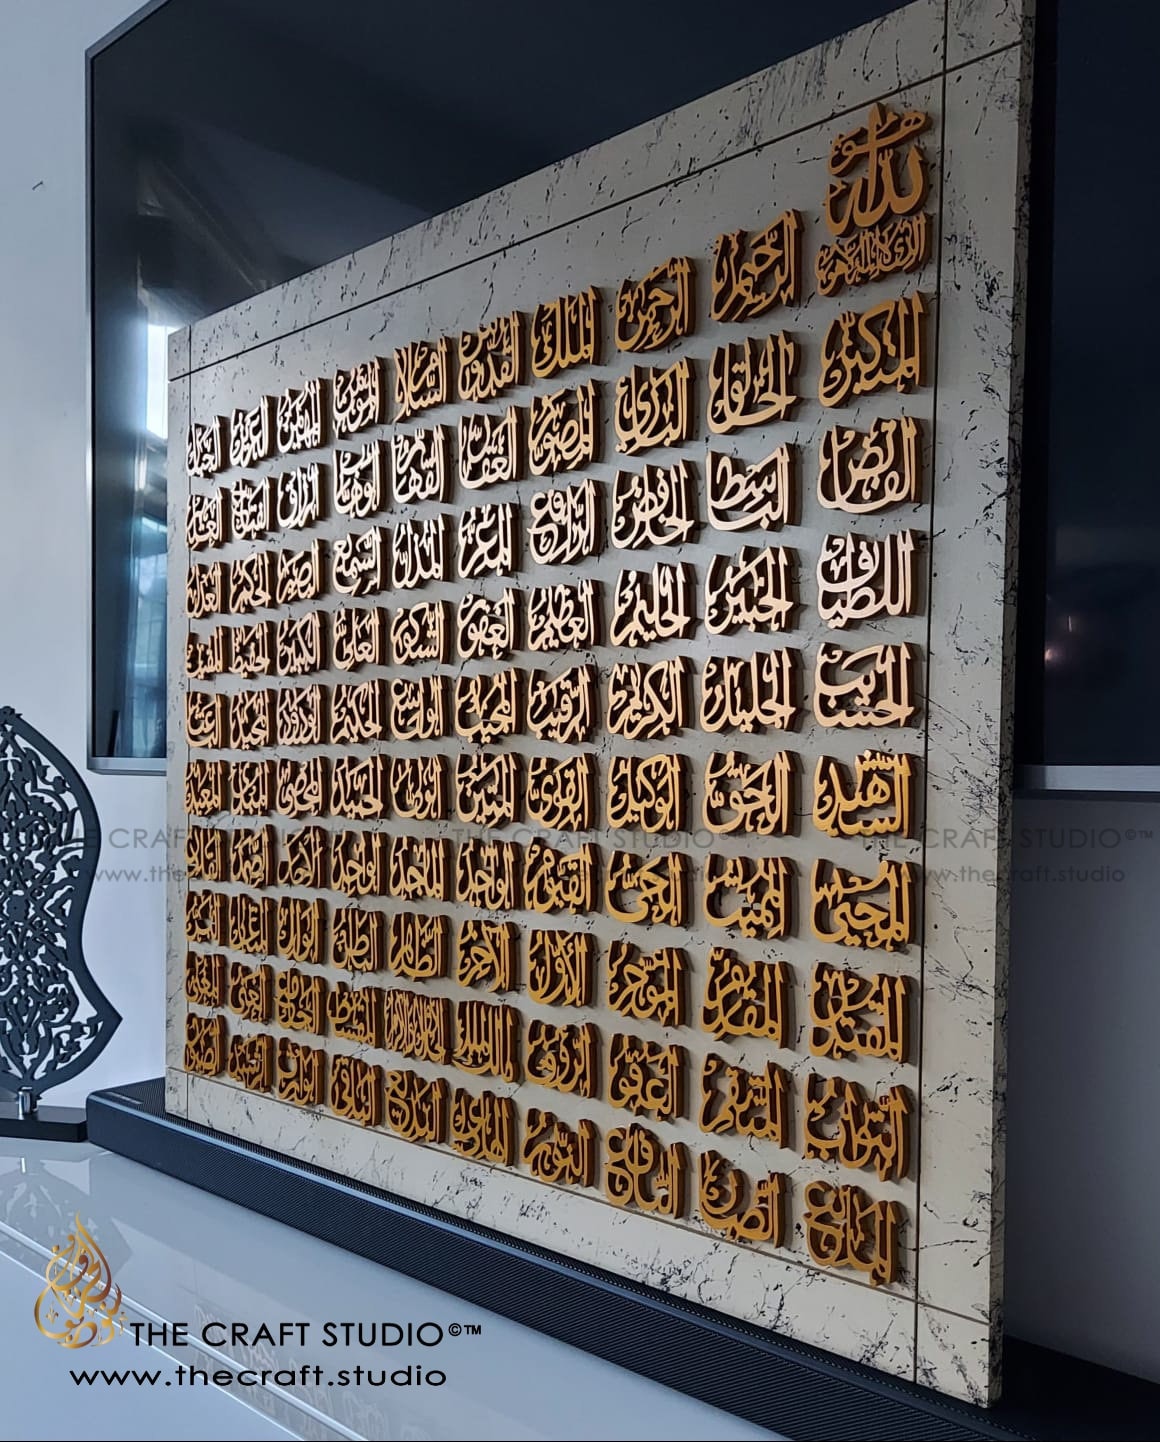 Deryashomelove - Poster, Islam, Dekoration, Home, Kunst, Allah cc